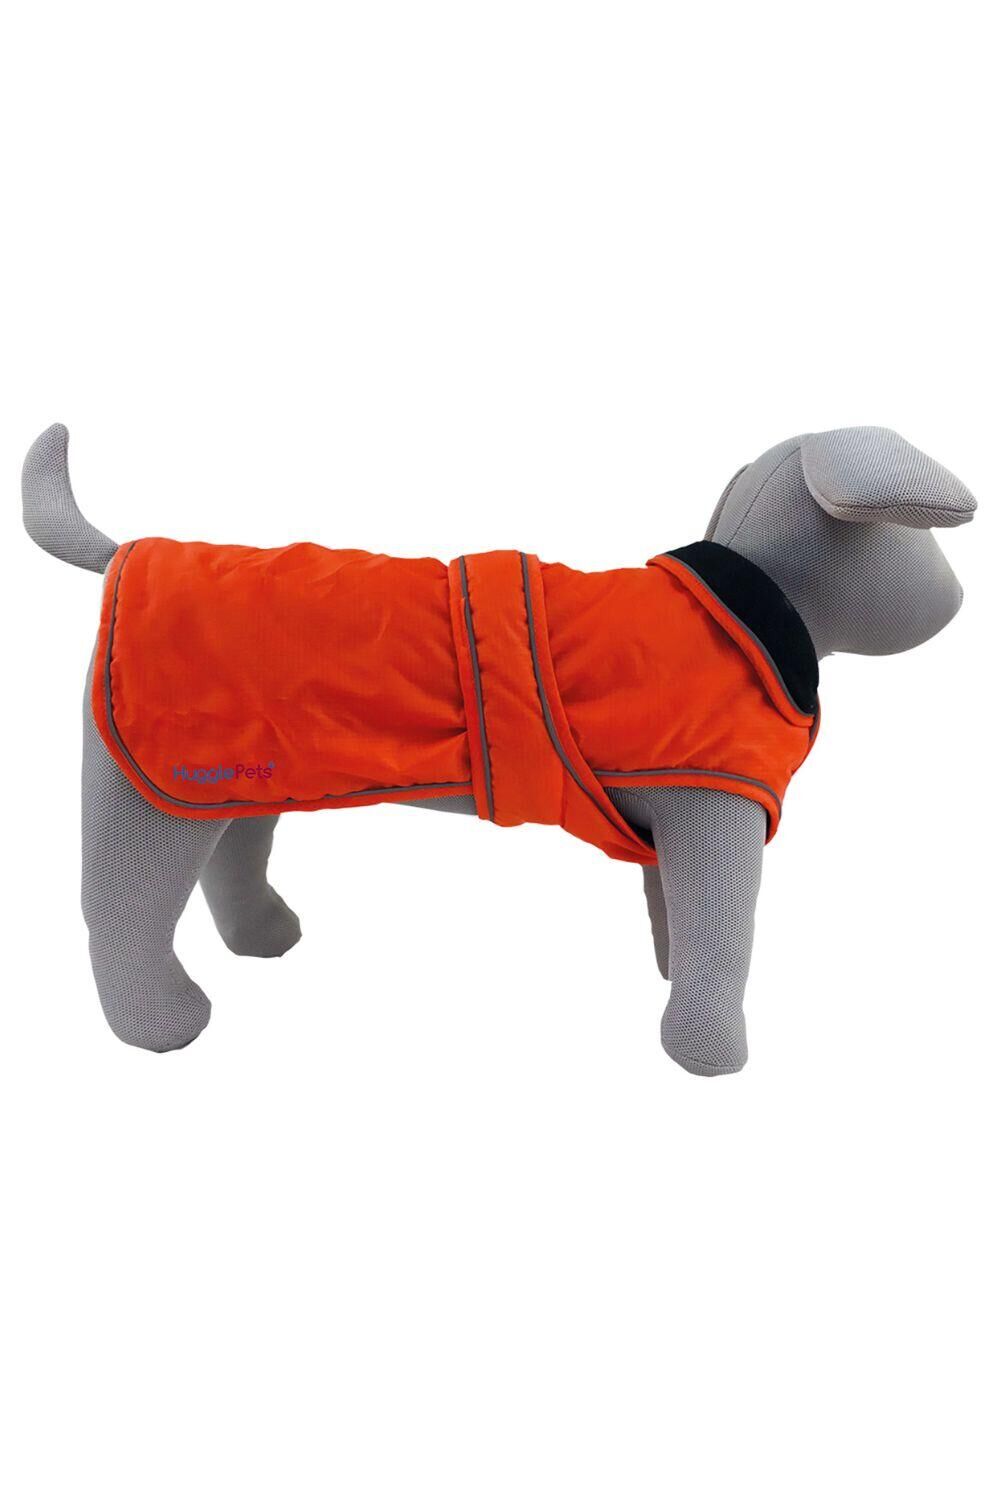 HUGGLEPETS HugglePets Arctic Armour Dog Coat